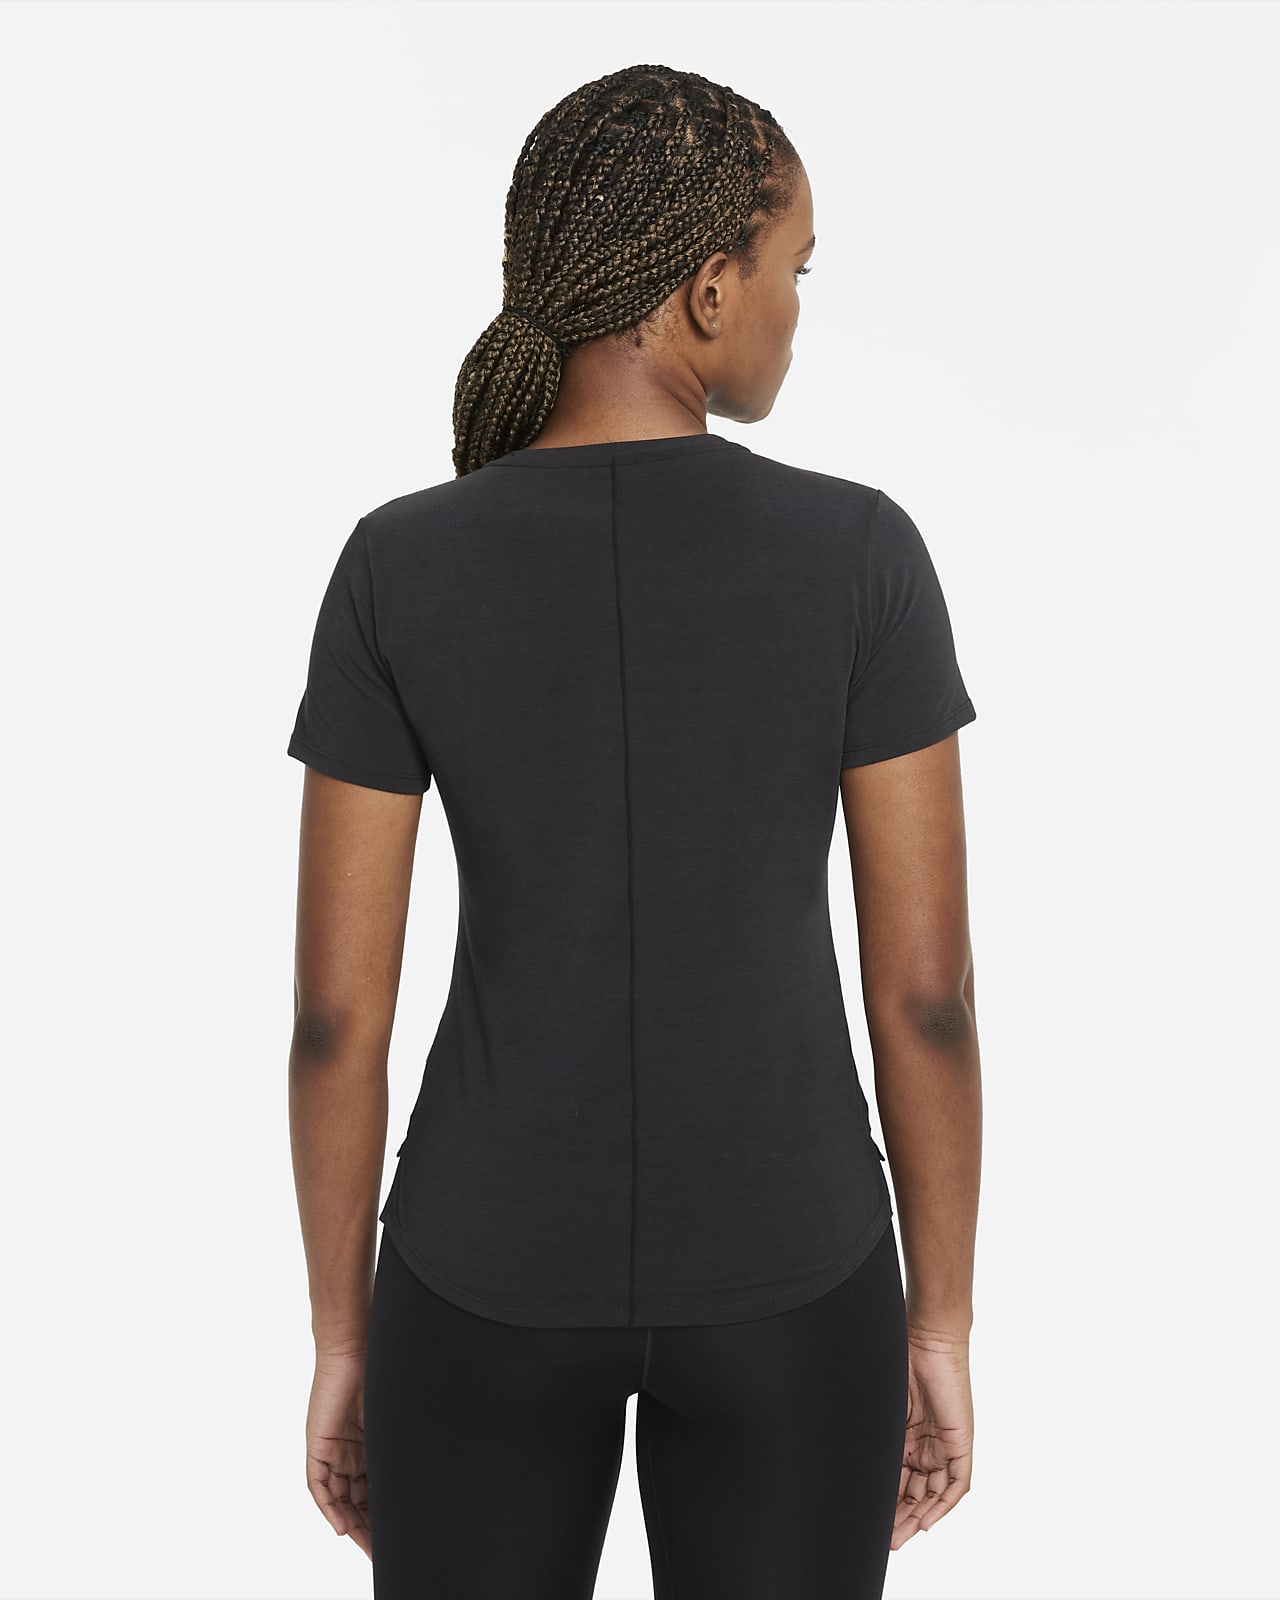 Nike Dri-FIT UV Fit Luxe Standard One Top. Short-Sleeve Women\'s